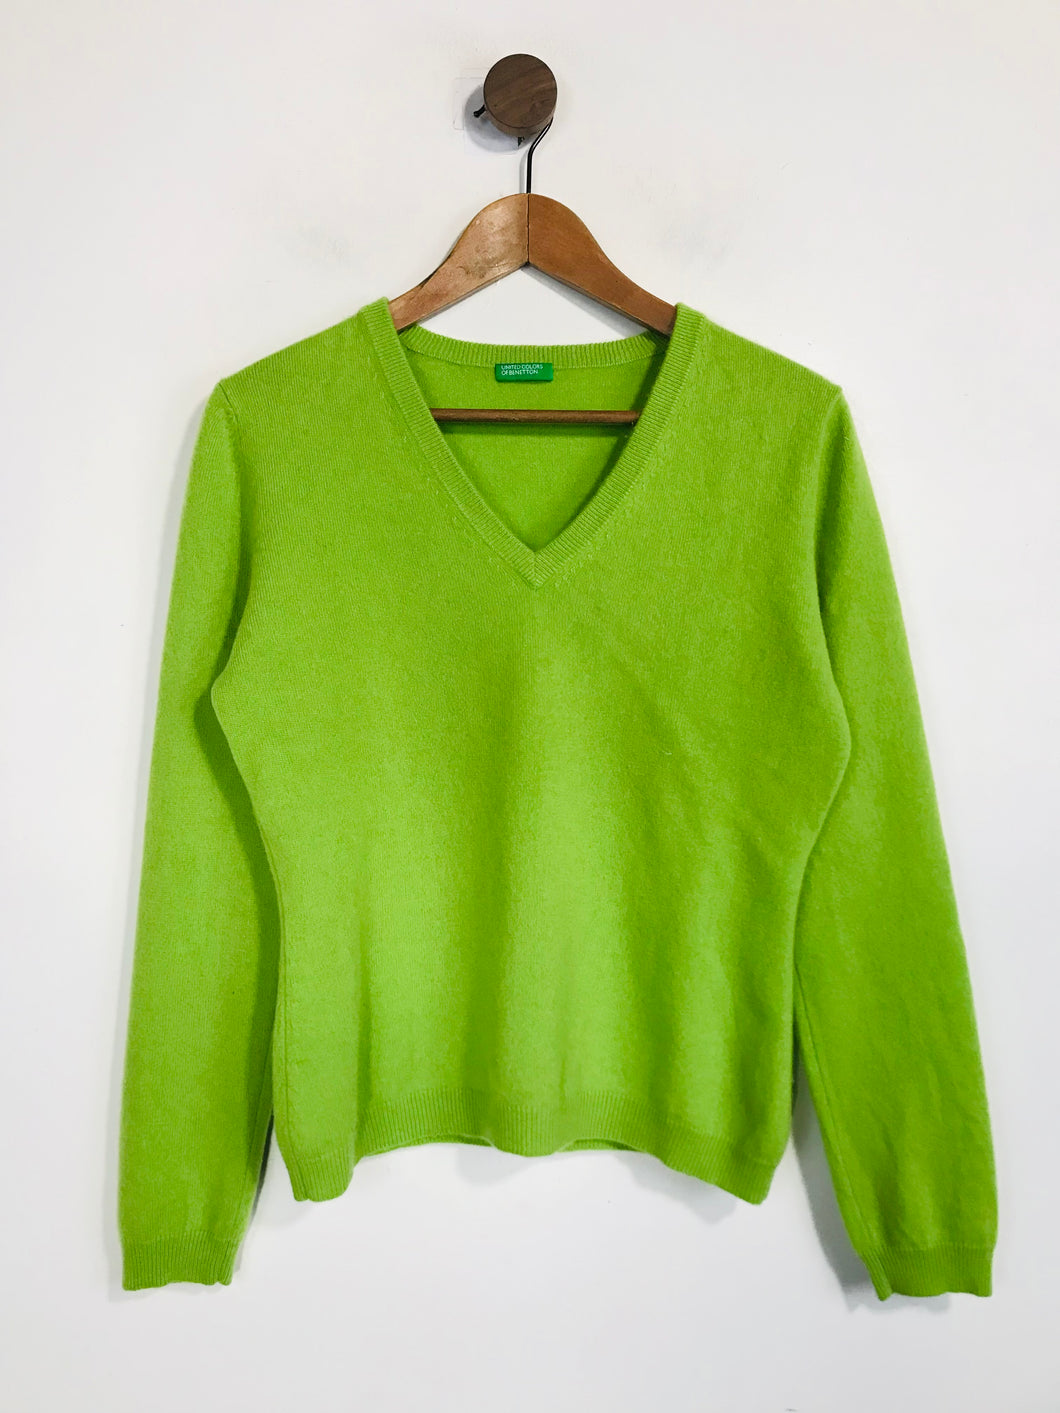 United Colors of Benetton Women's Cashmere V-Neck Jumper | M UK10-12 | Green